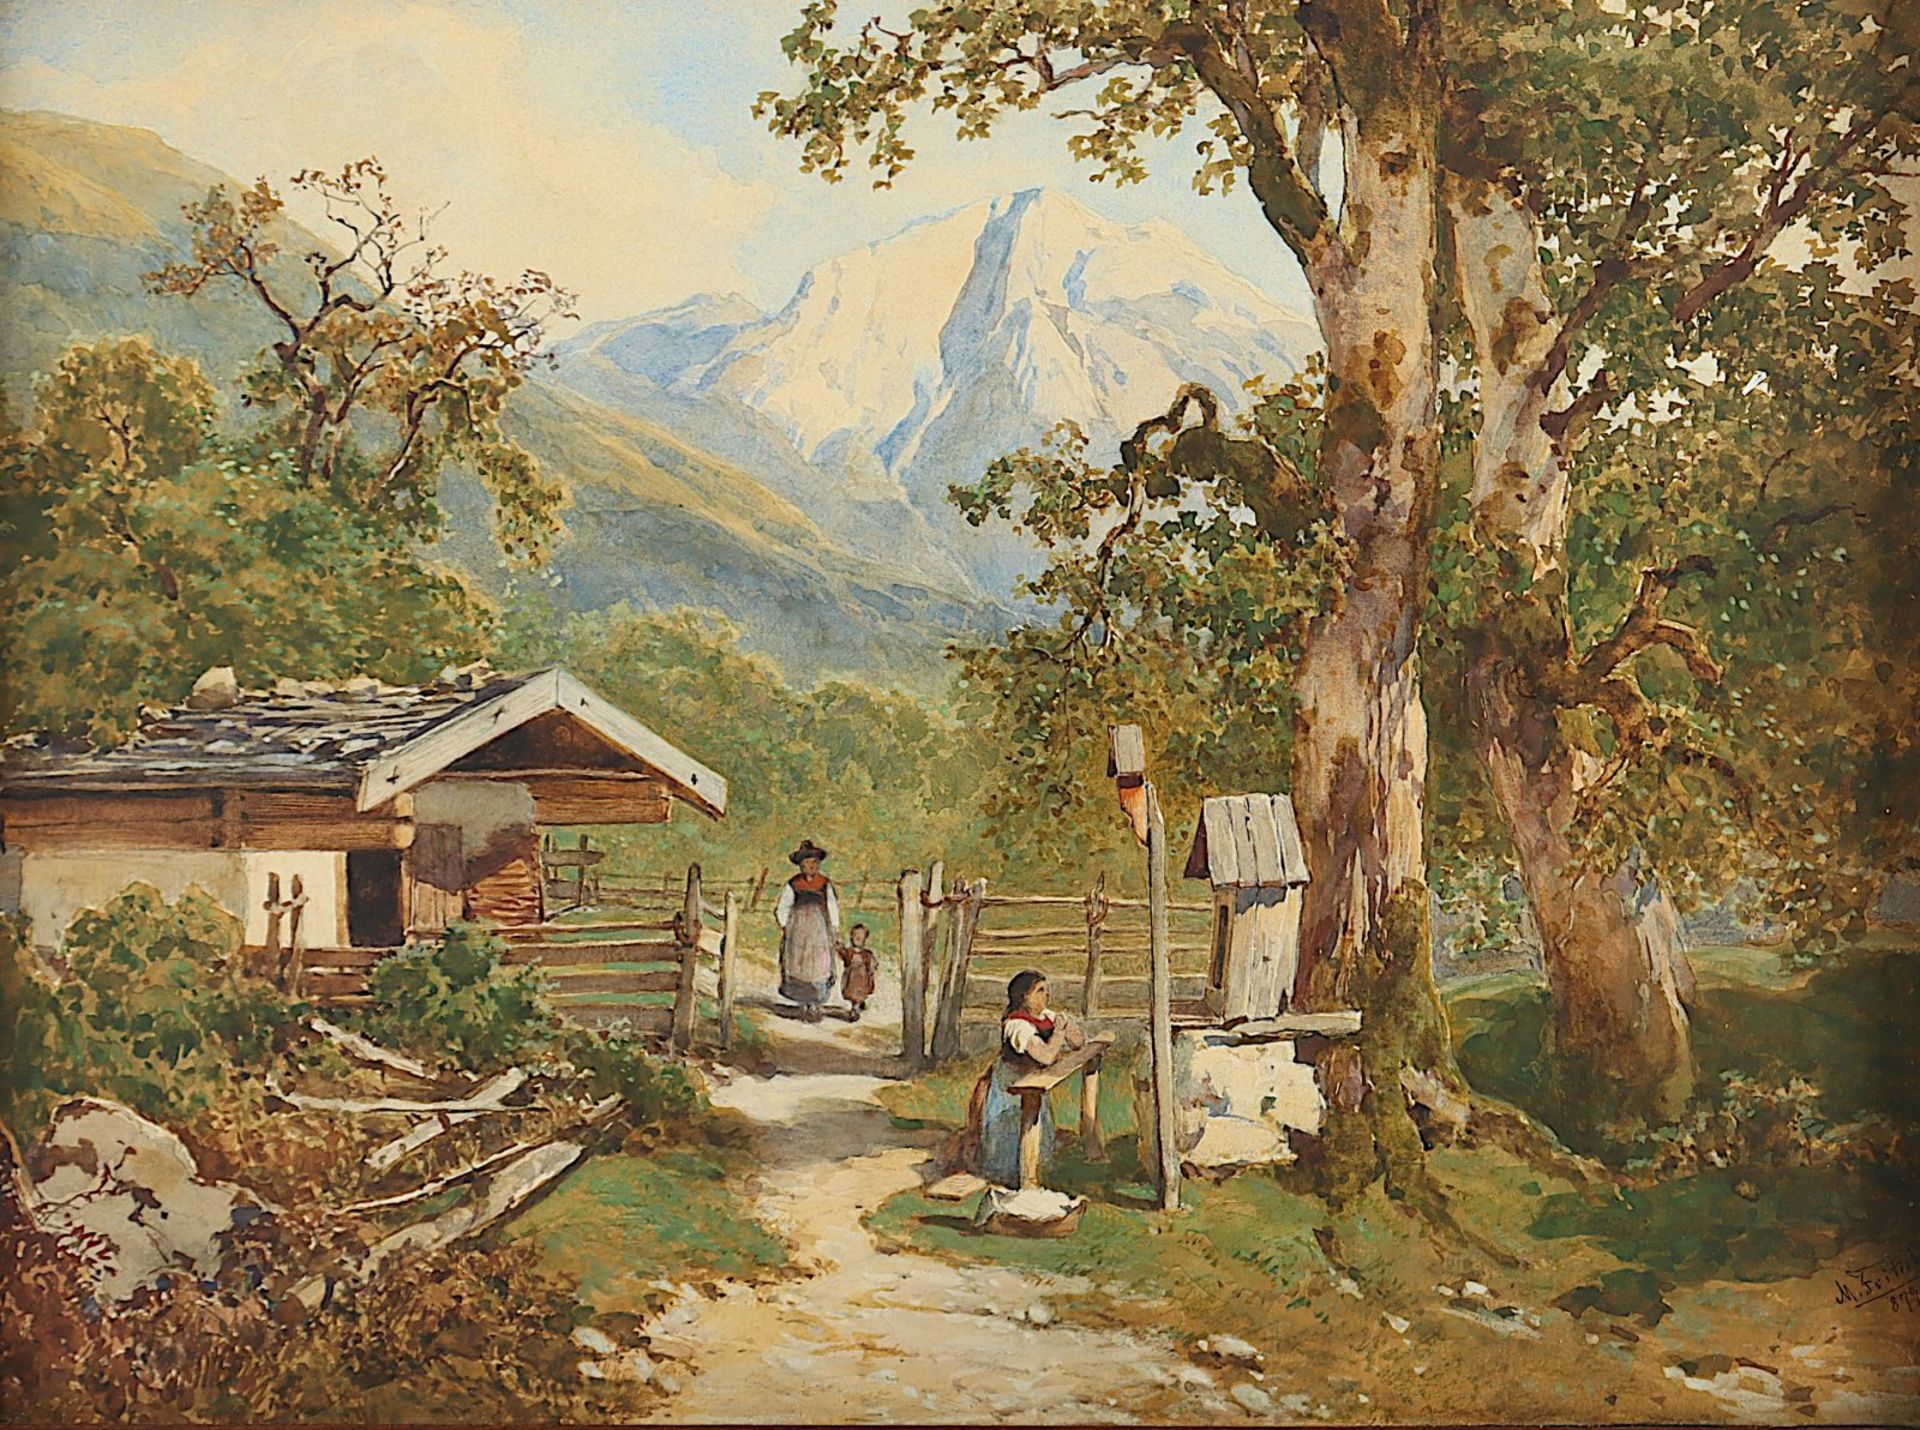 FRITSCH, Melchior (1826-1889), "Alpenlandschaft mit Wegekreuz", R.